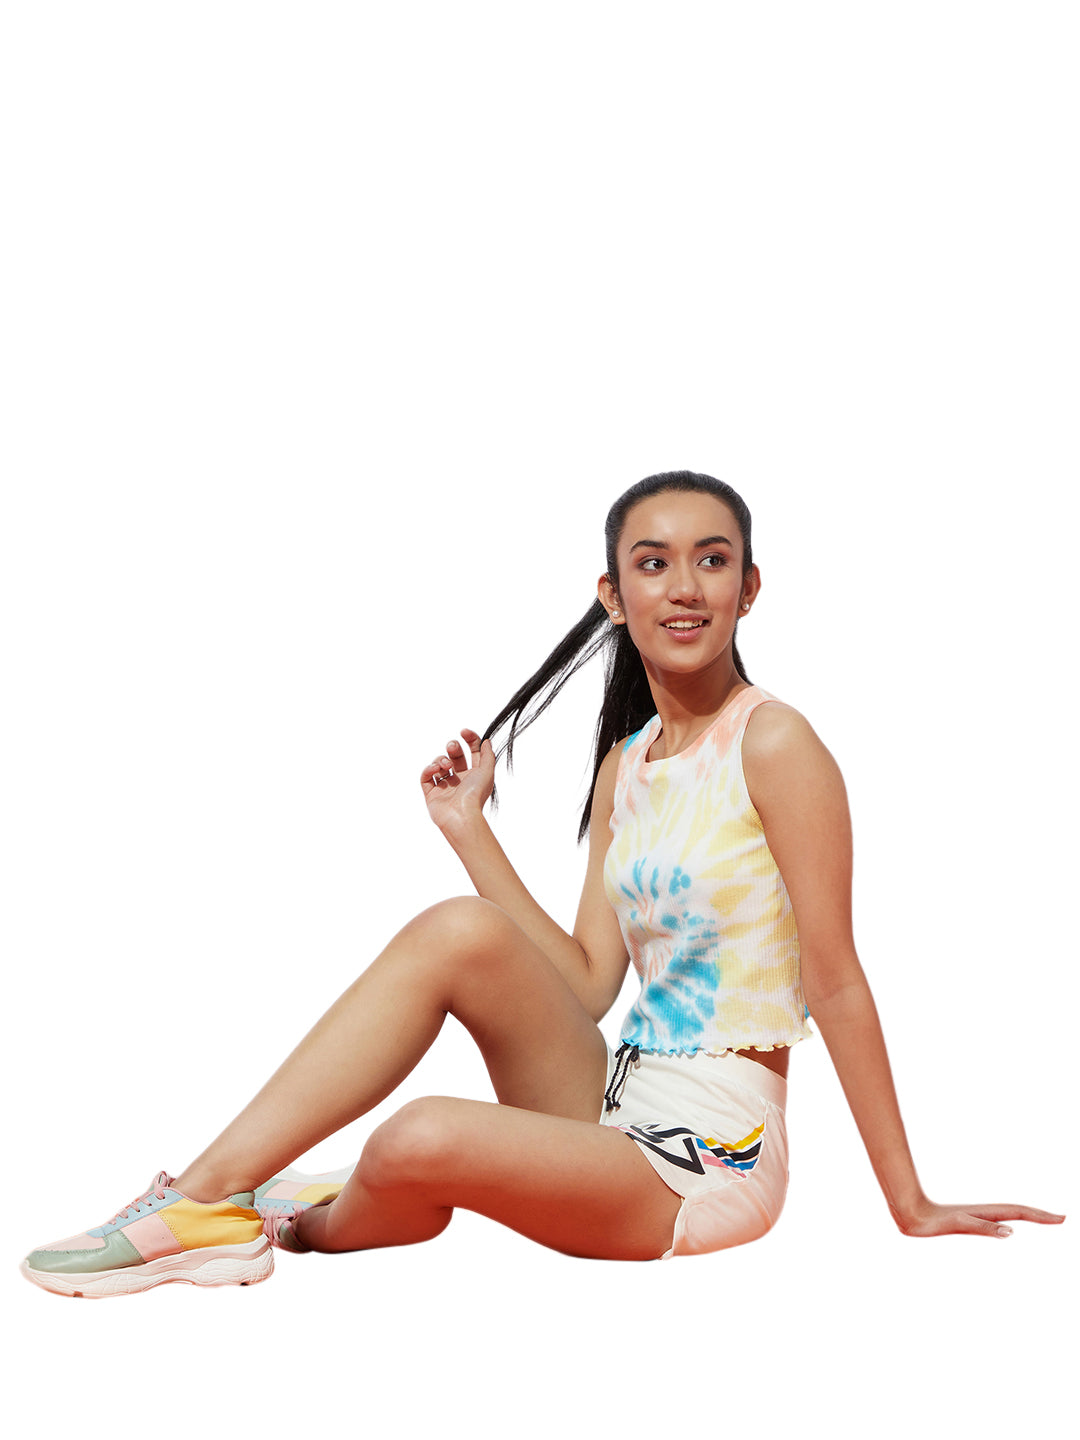 Teen Girl Pastel Print Adventure Tshirt & Shorts Set